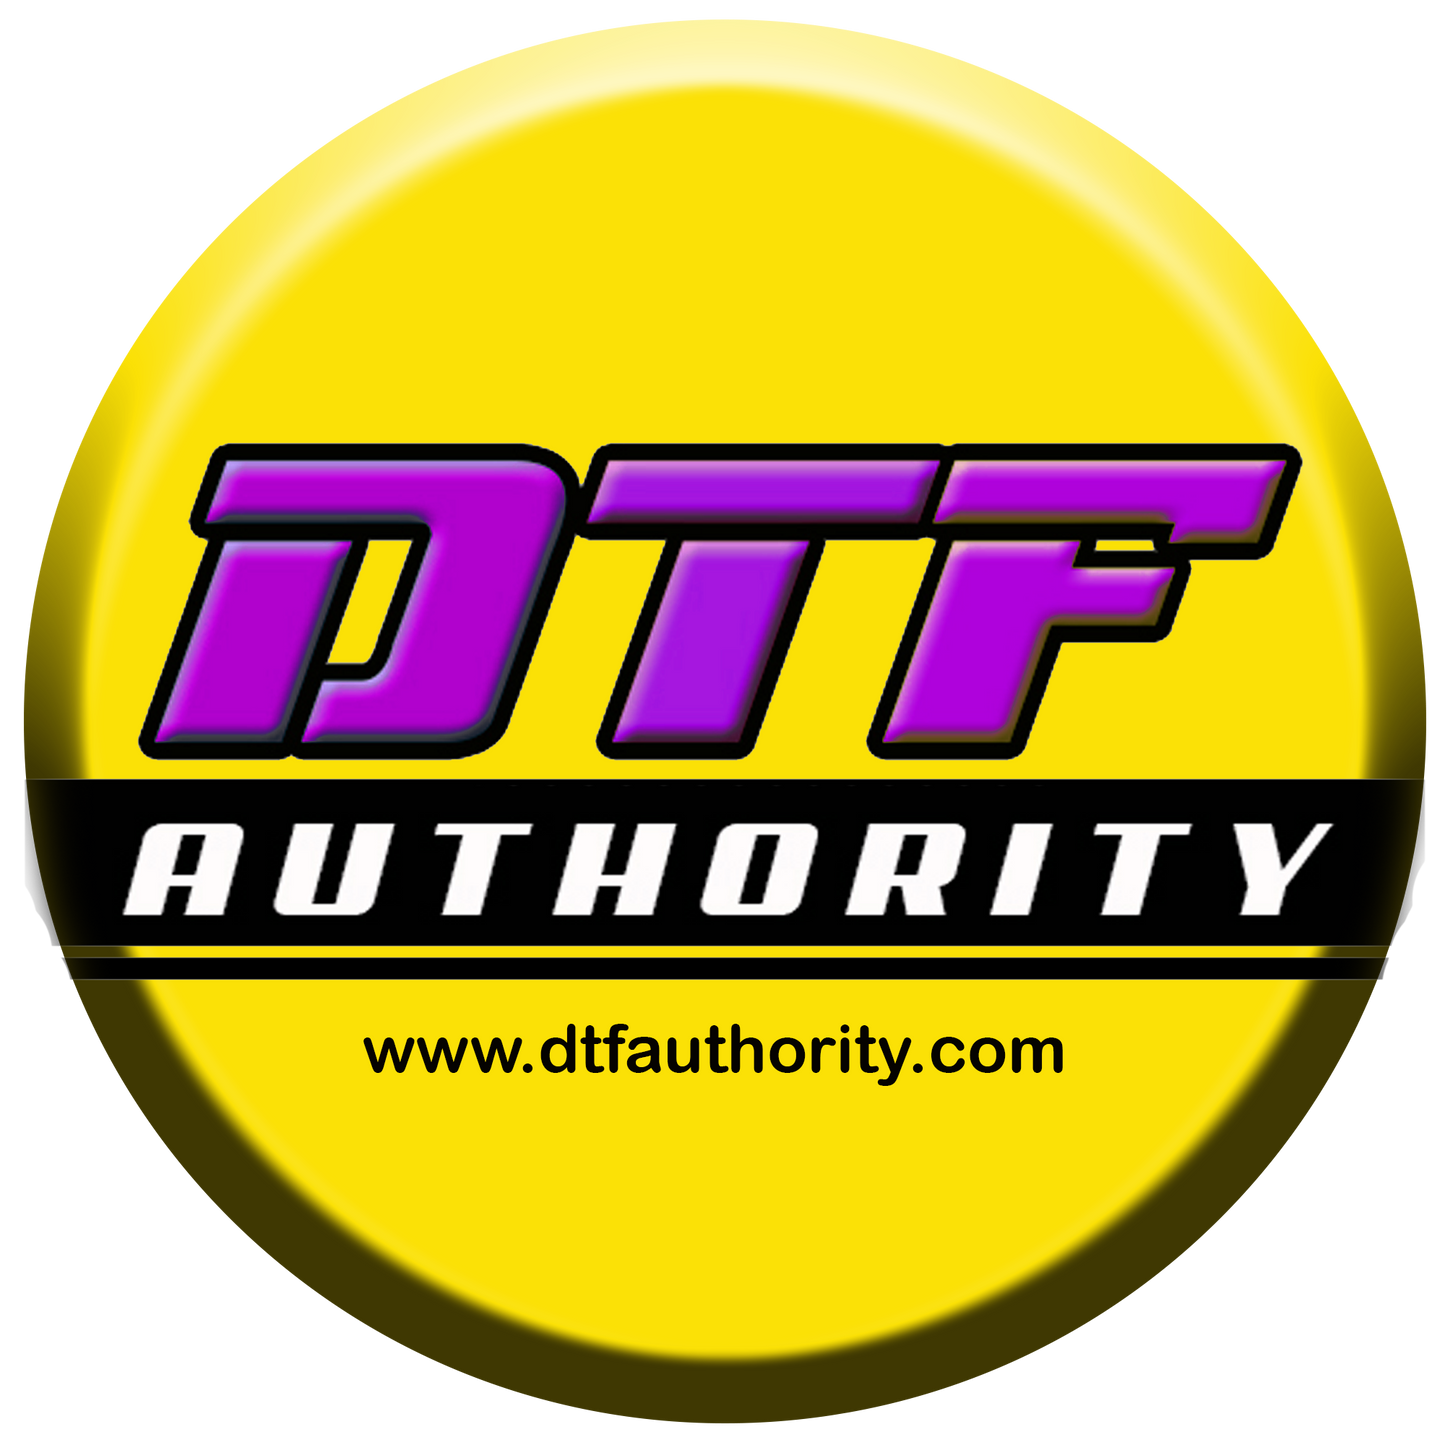 1440 DPI DTF Authority, LowTemp Adhesive Custom Made Transfer Film